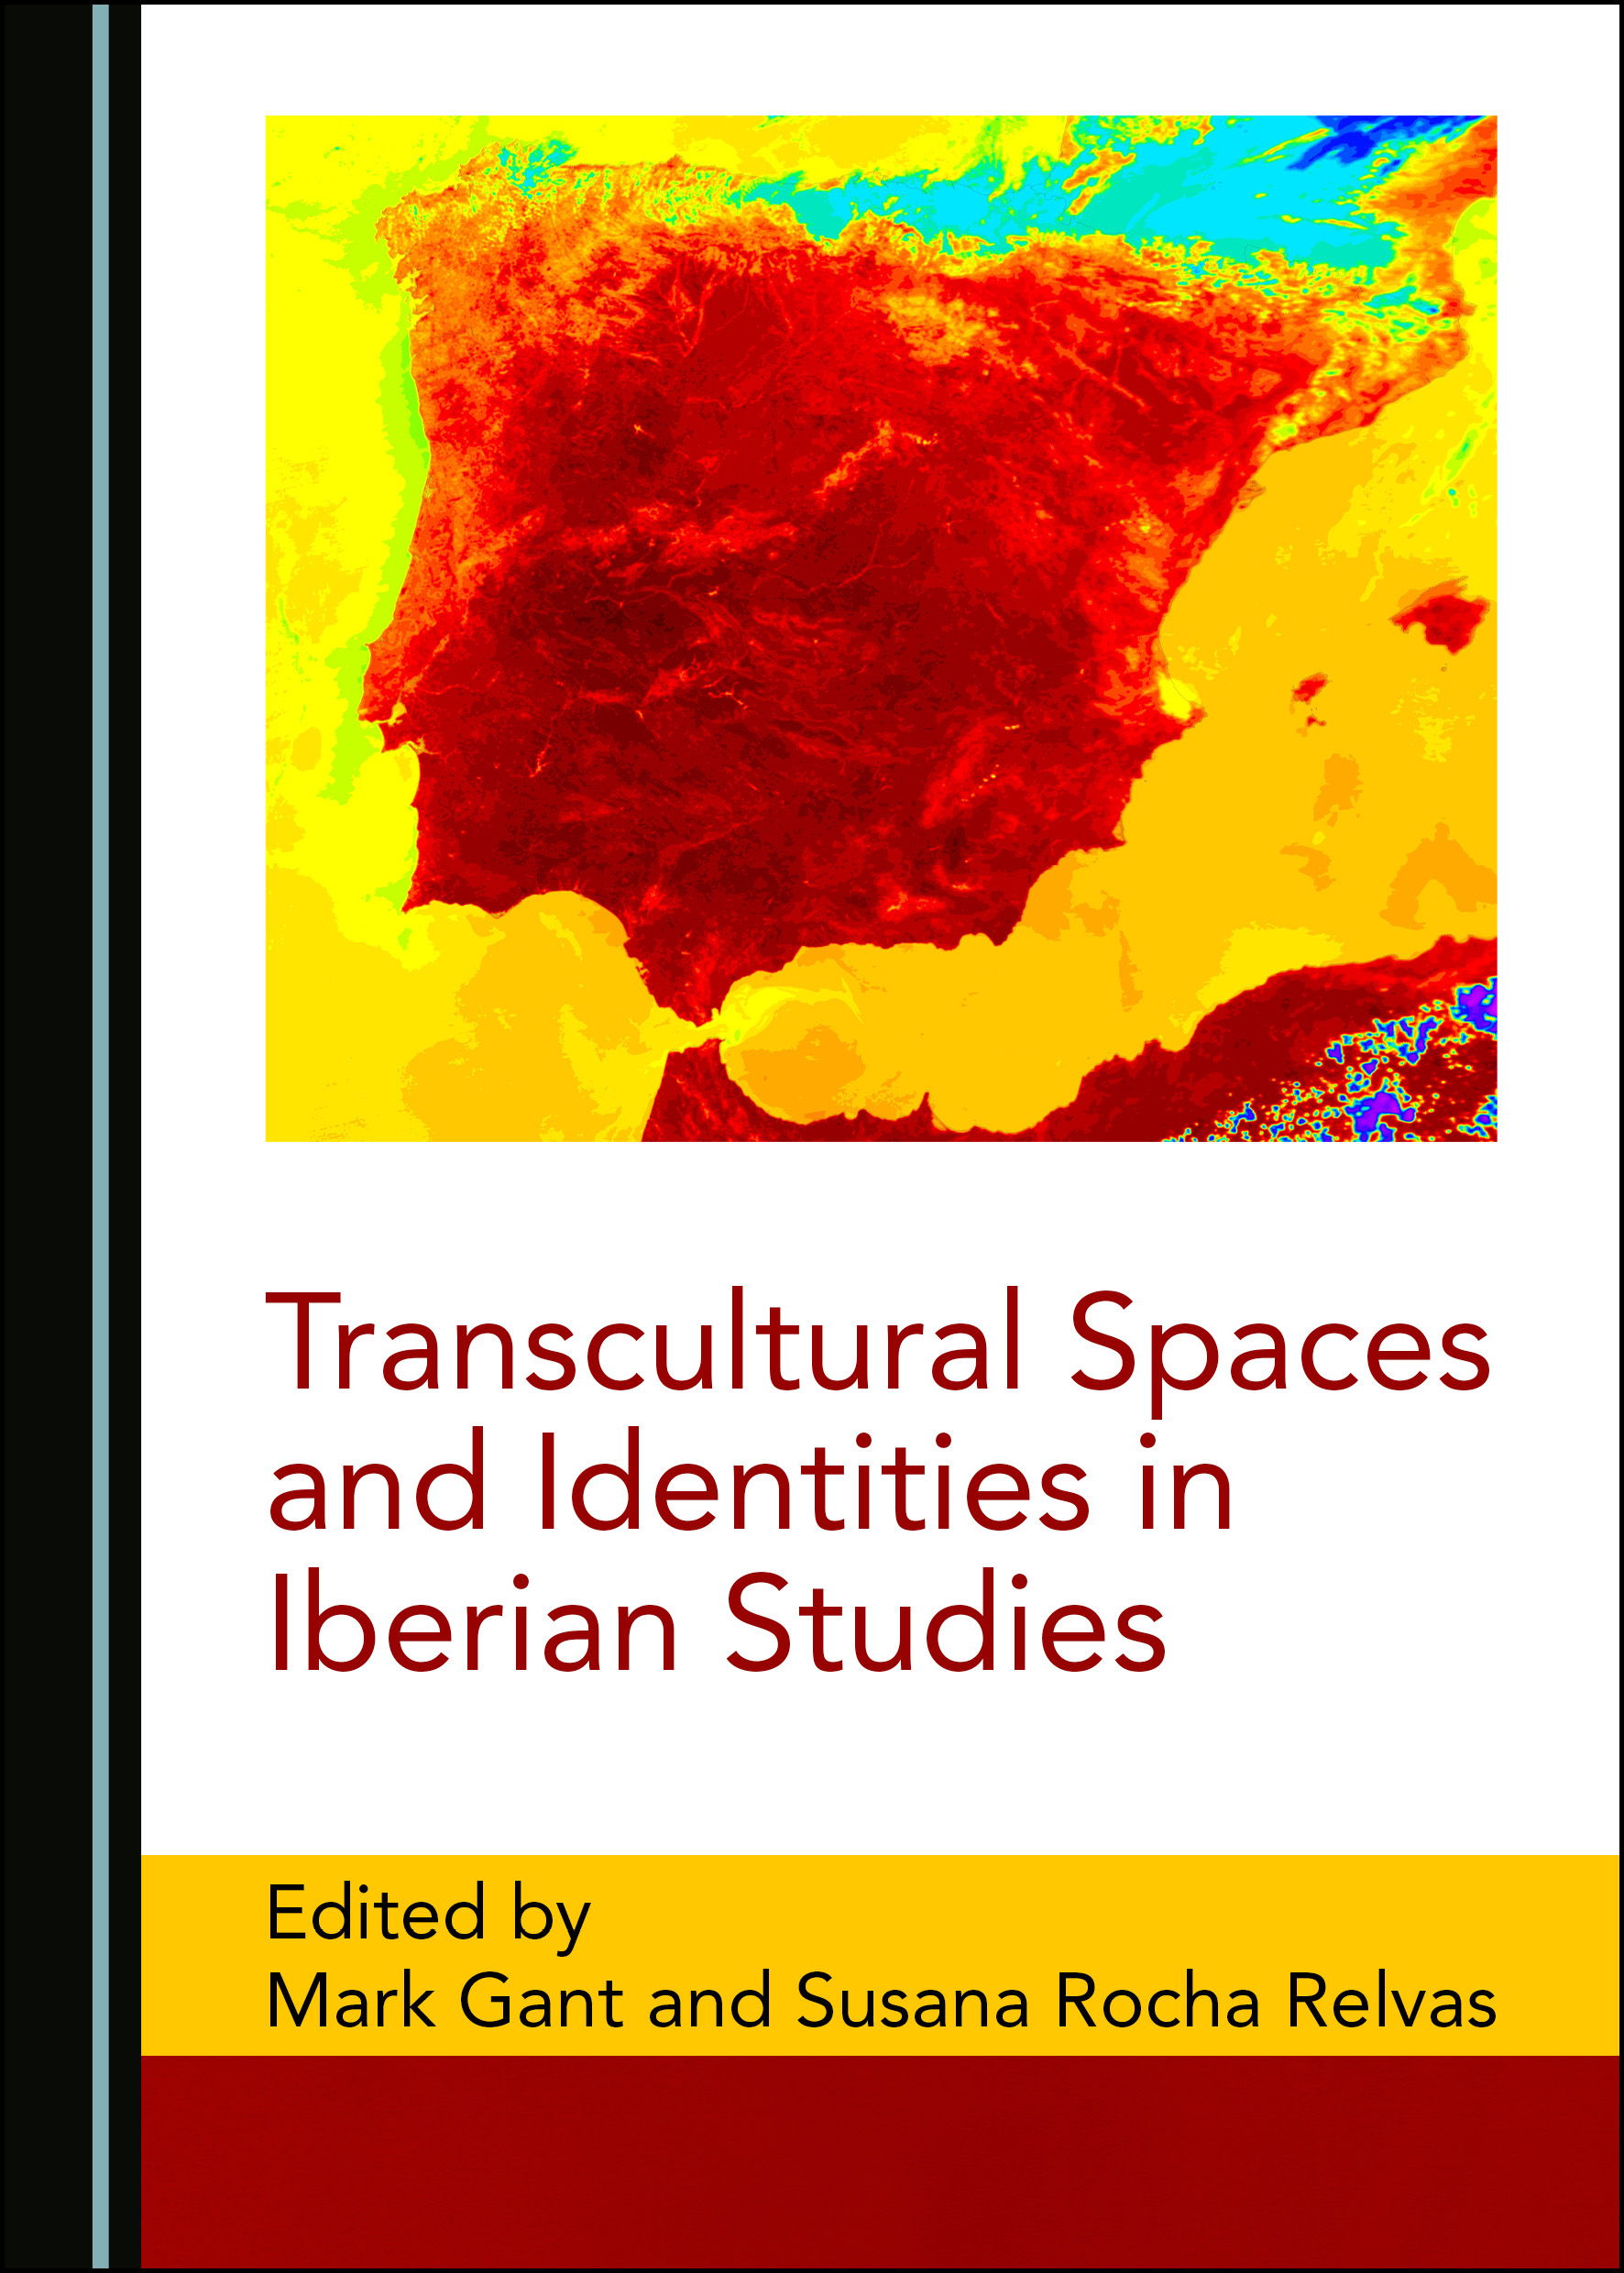 Imagen de portada del libro Transcultural Spaces and Identities in Iberian Studies